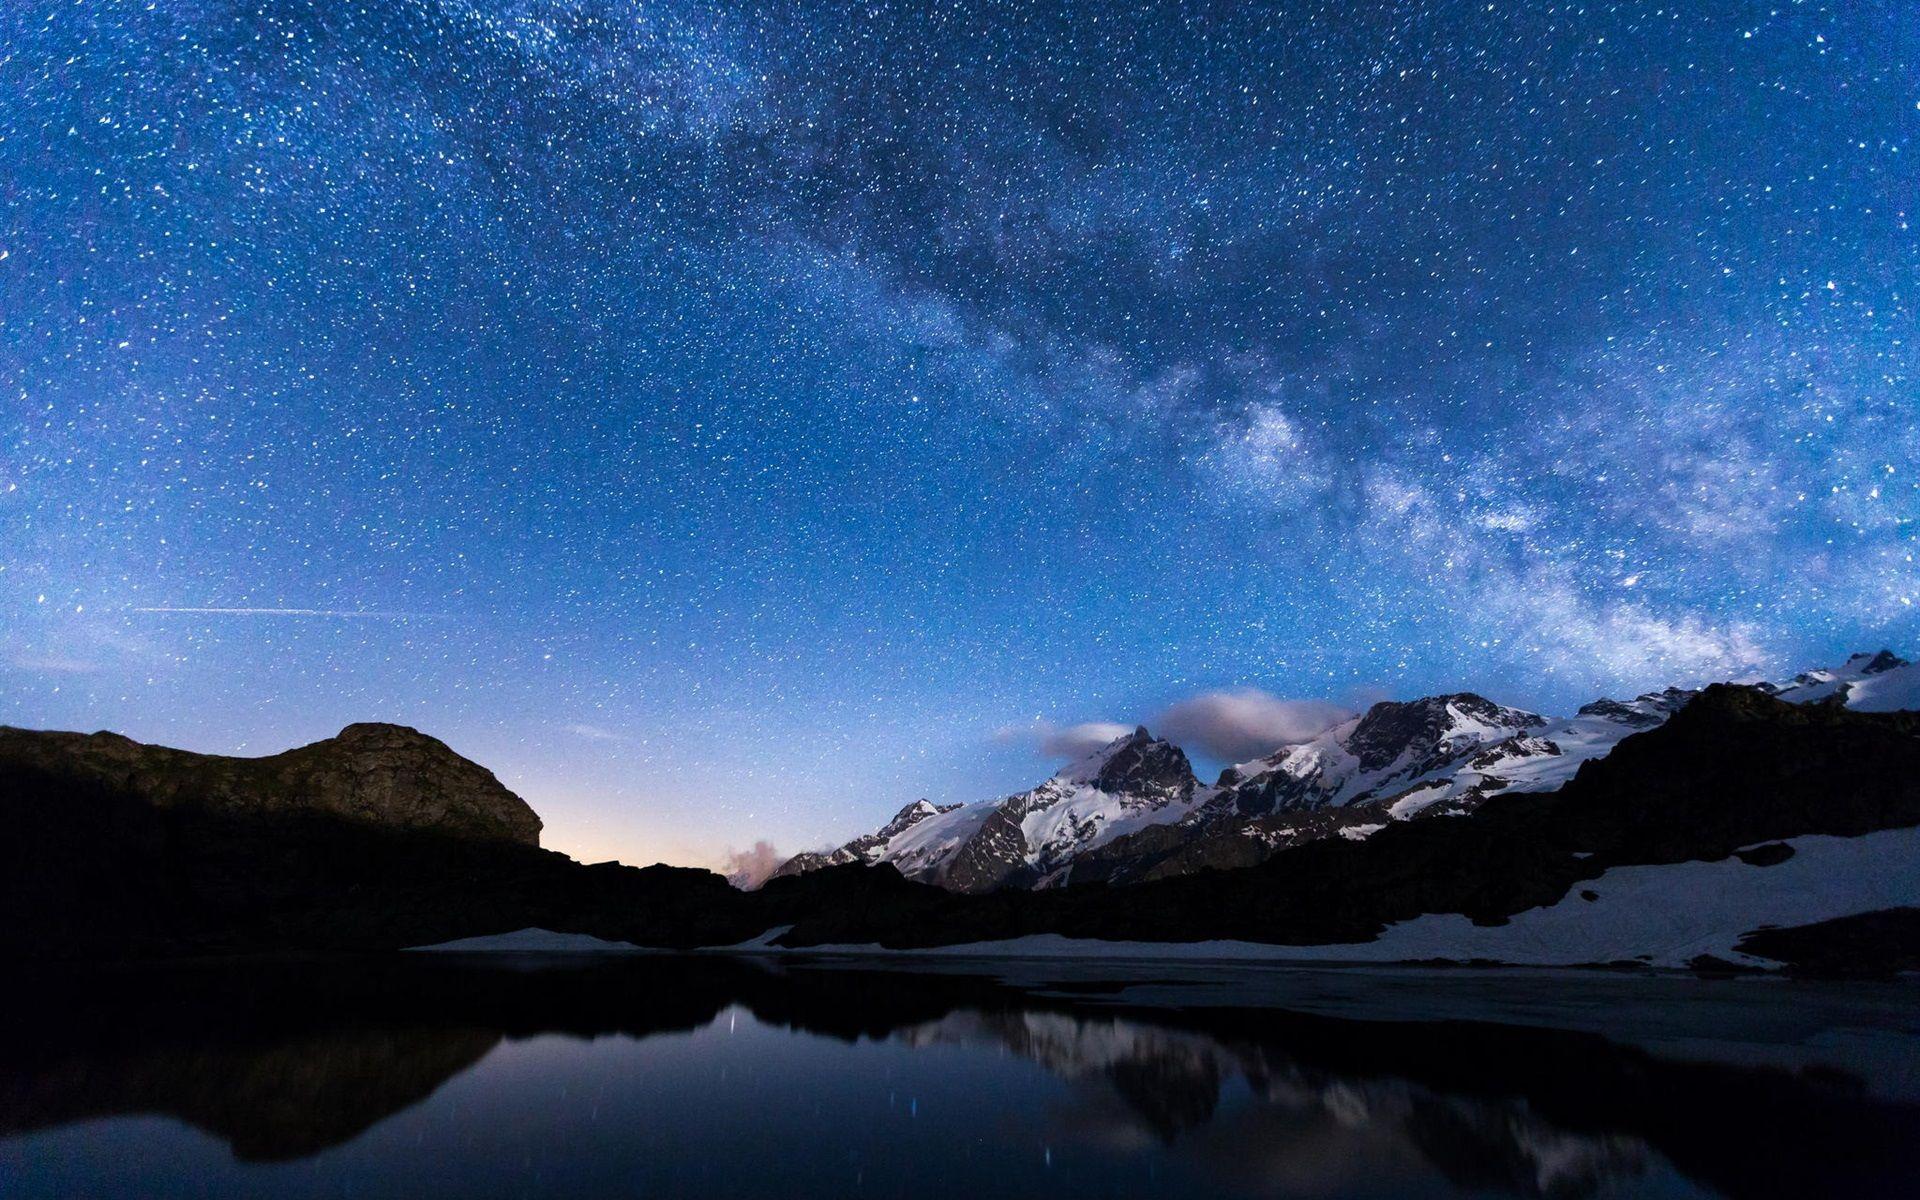 Night, lake, mountains, sky, stars, water reflection wallpaper